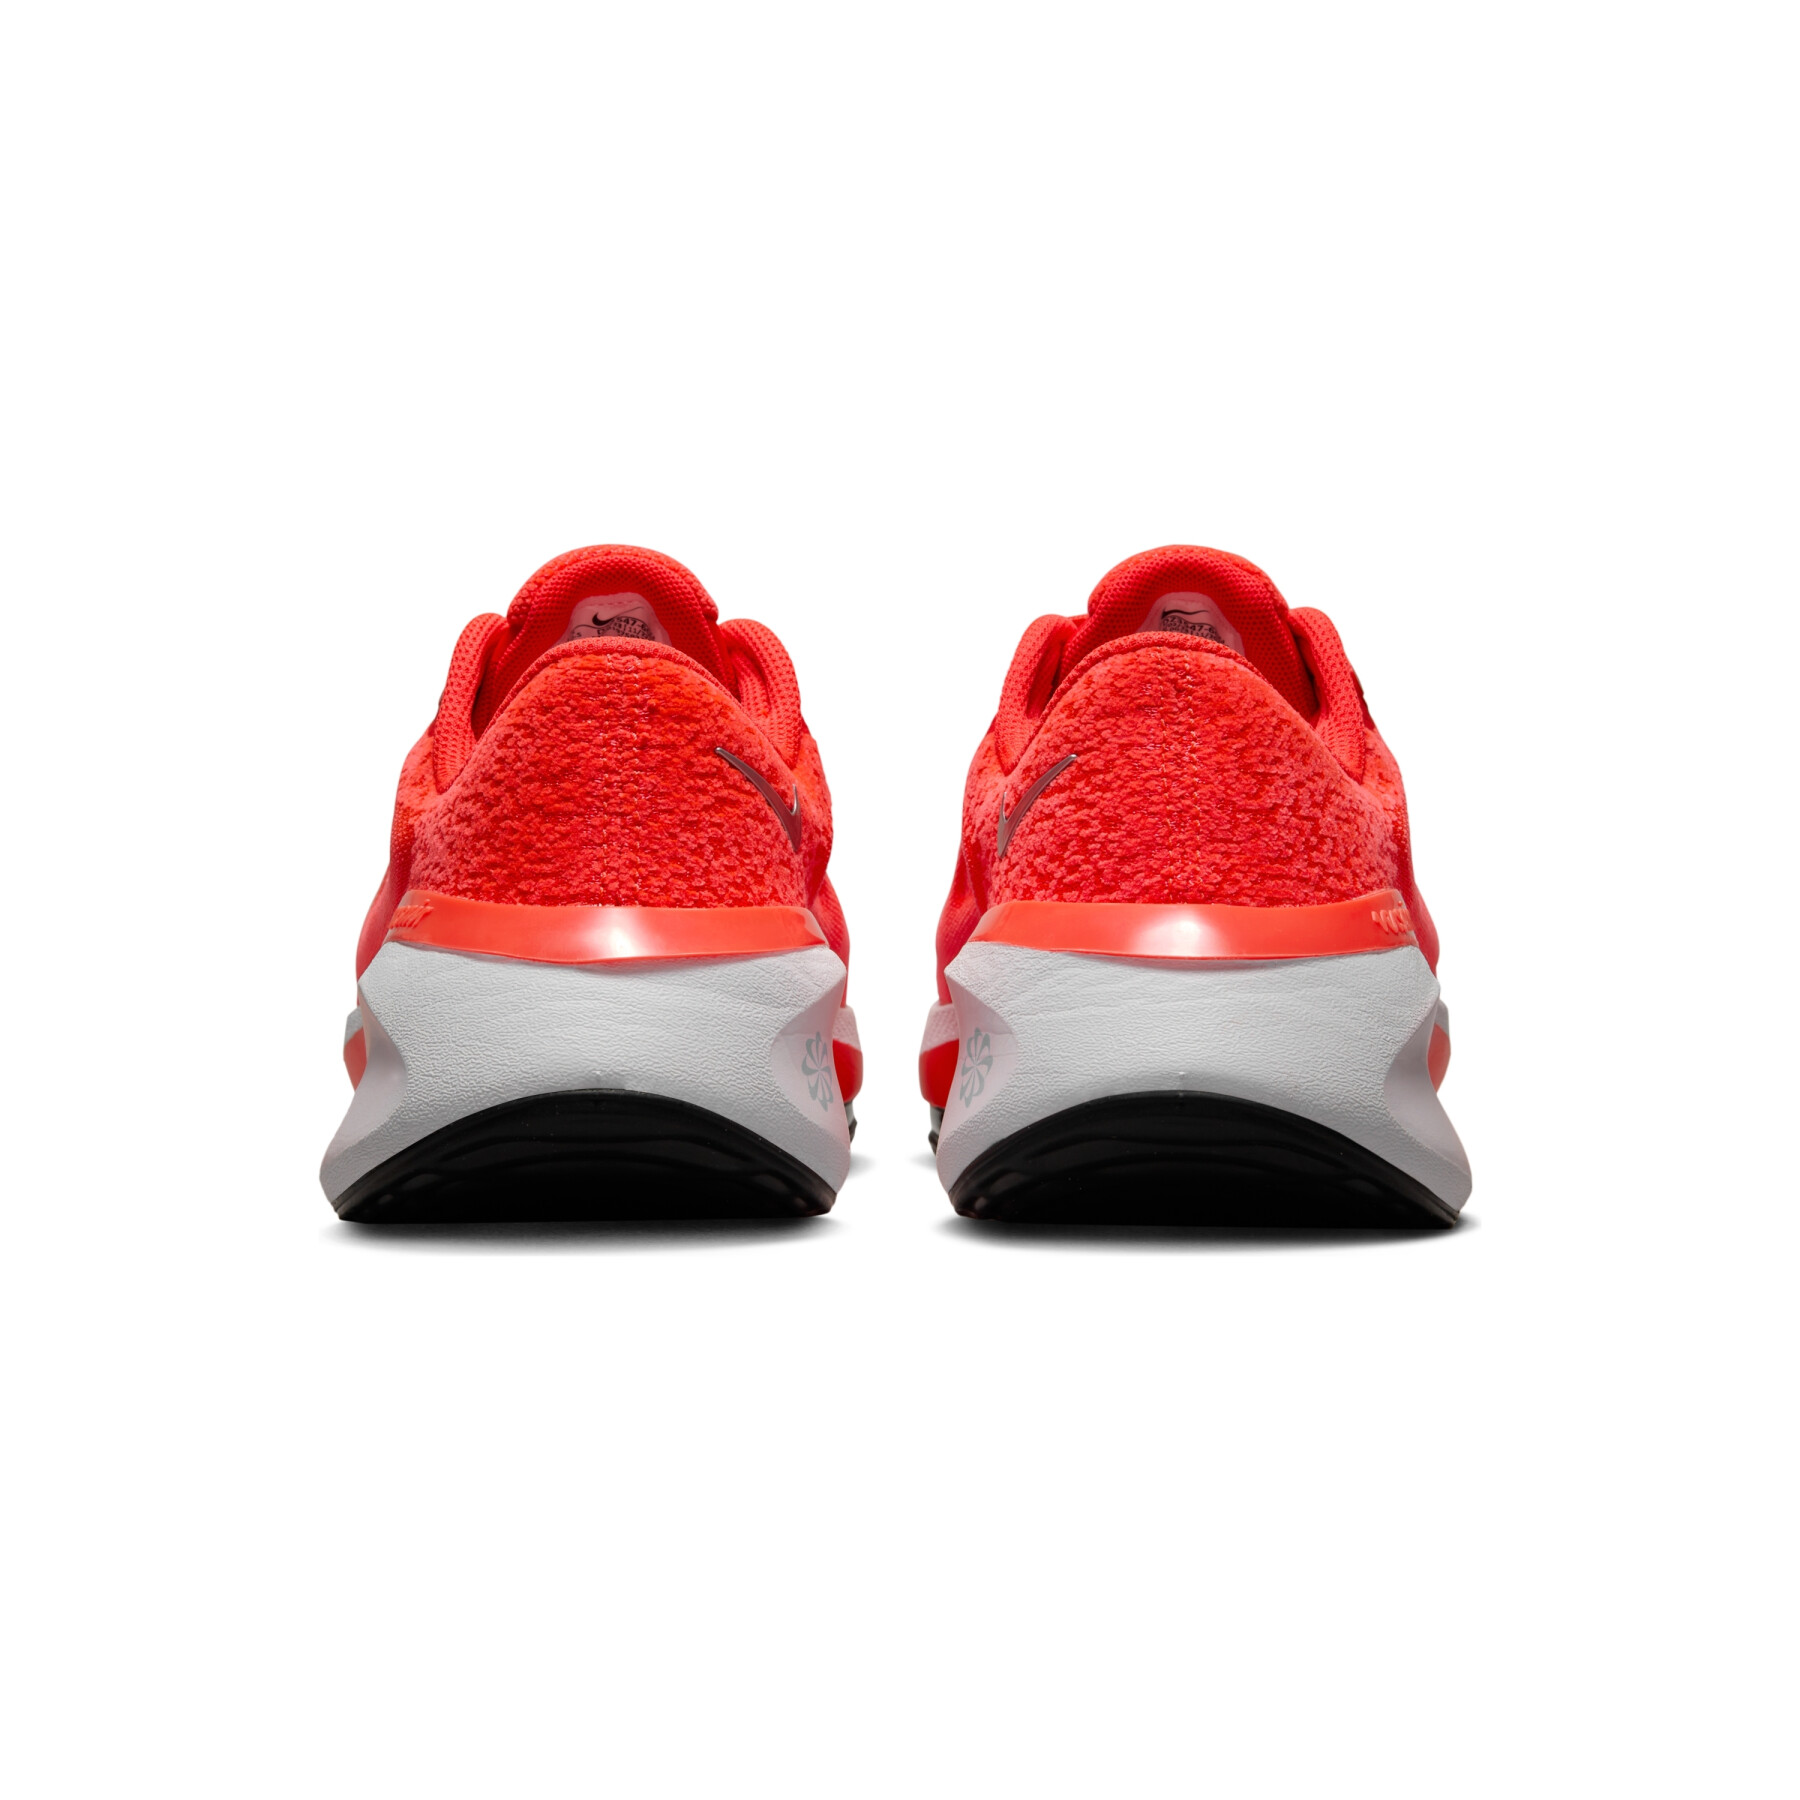 Women's cross training shoes Nike Versair